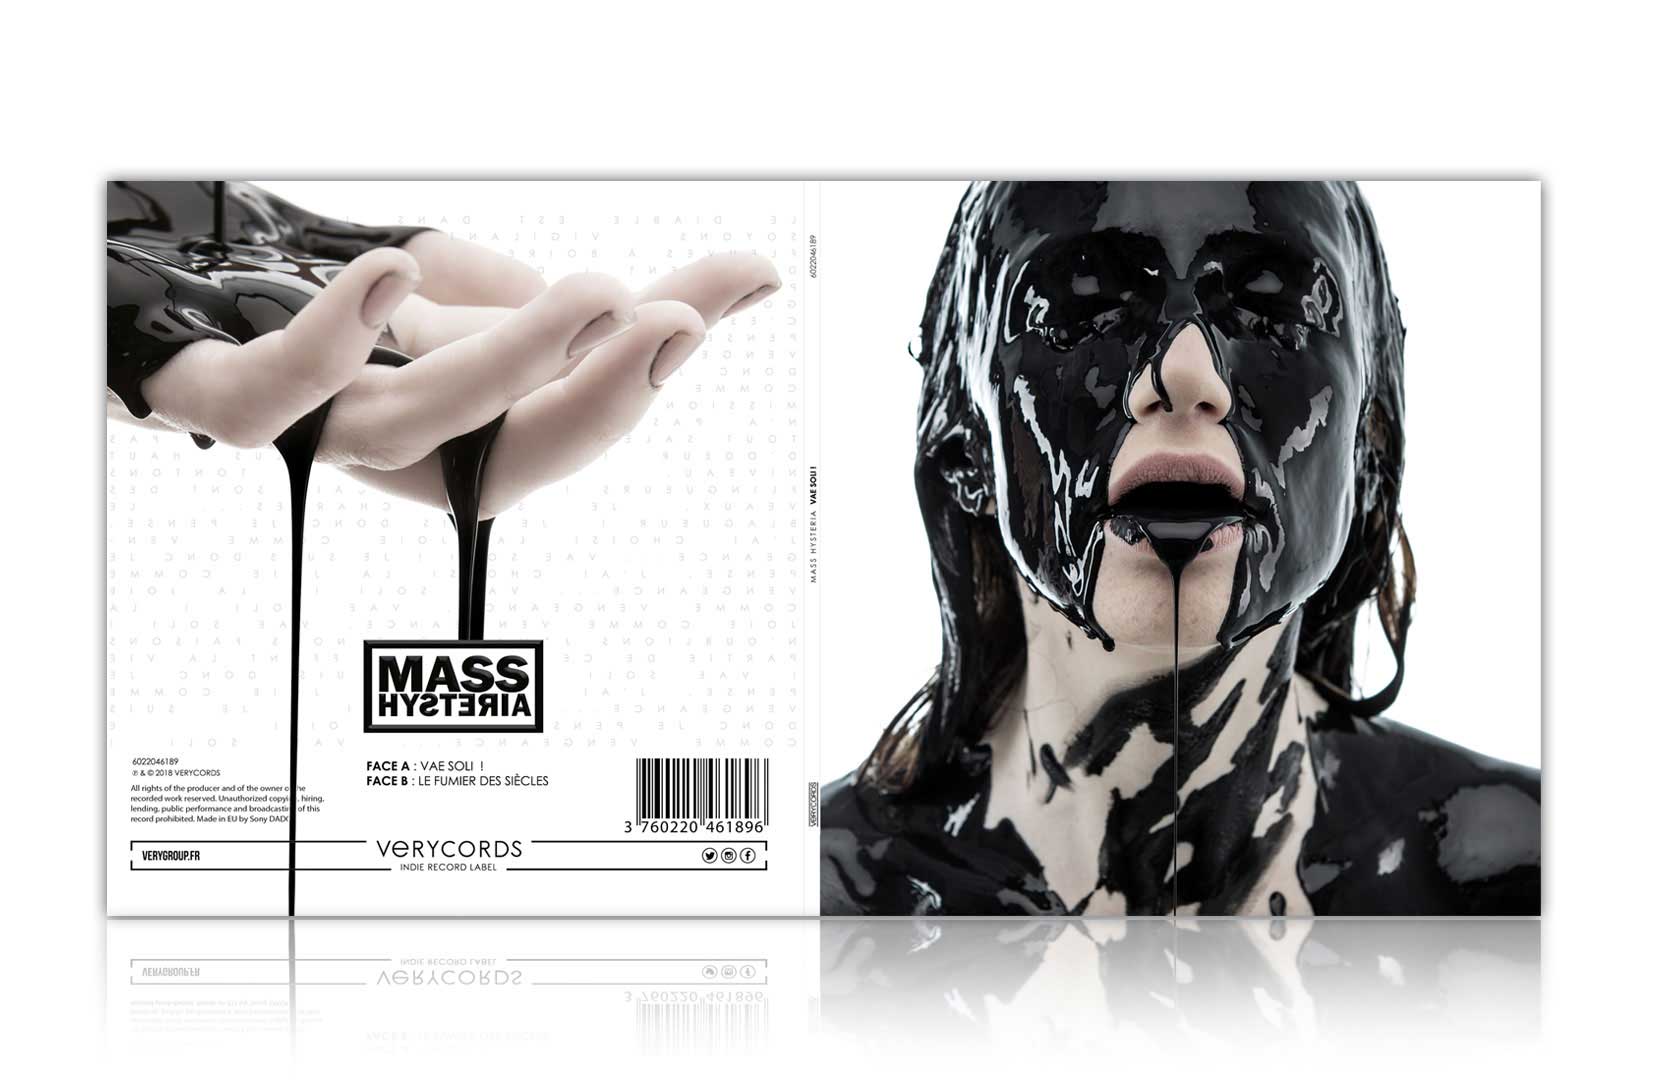 Mass Hysteria Matière Noire maxi- Photo & Artwork 